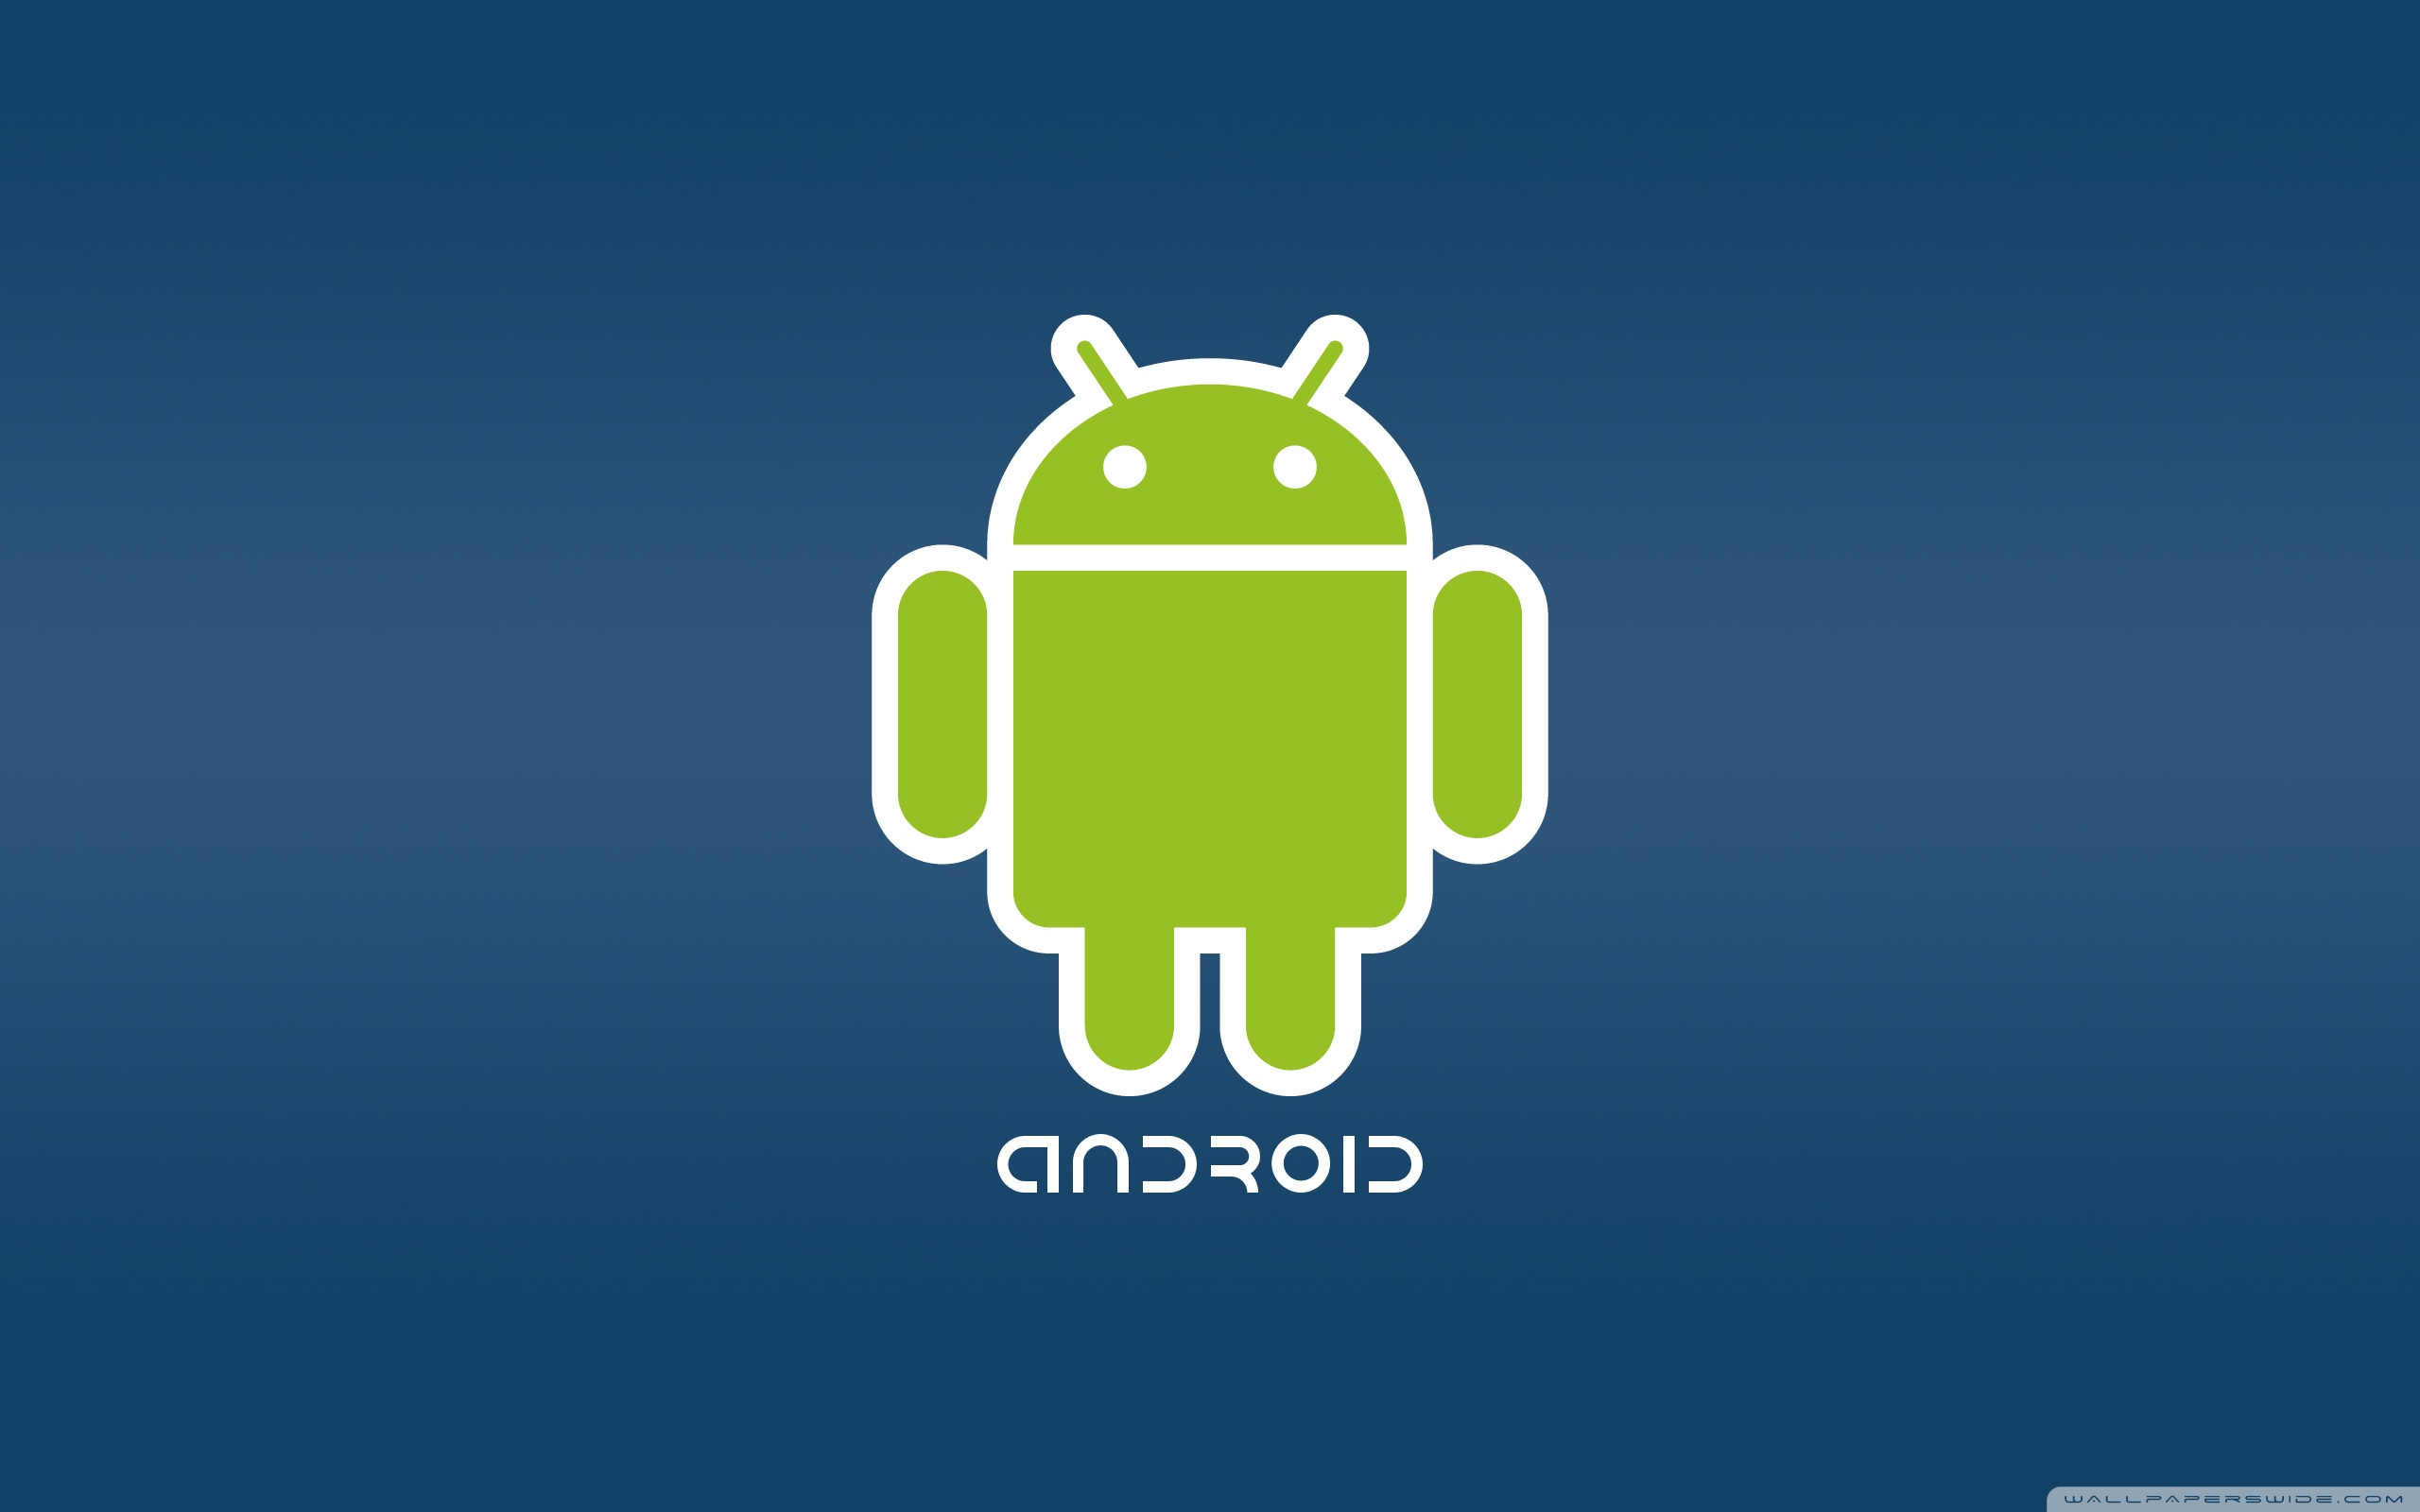 Android Logo Hd - HD Wallpaper 